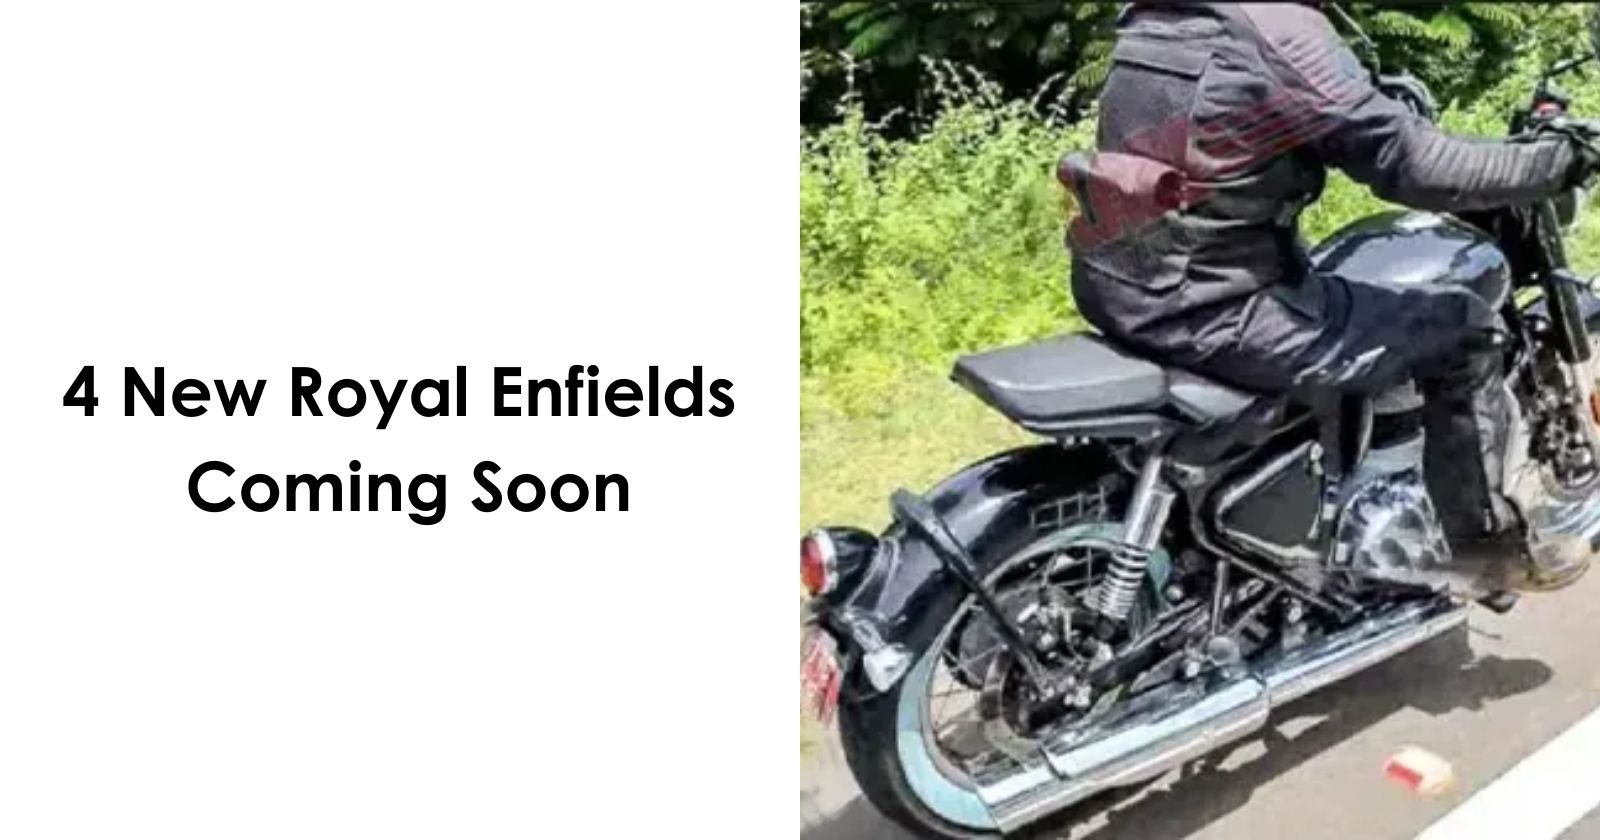 1 Royal Enfield New Bikes